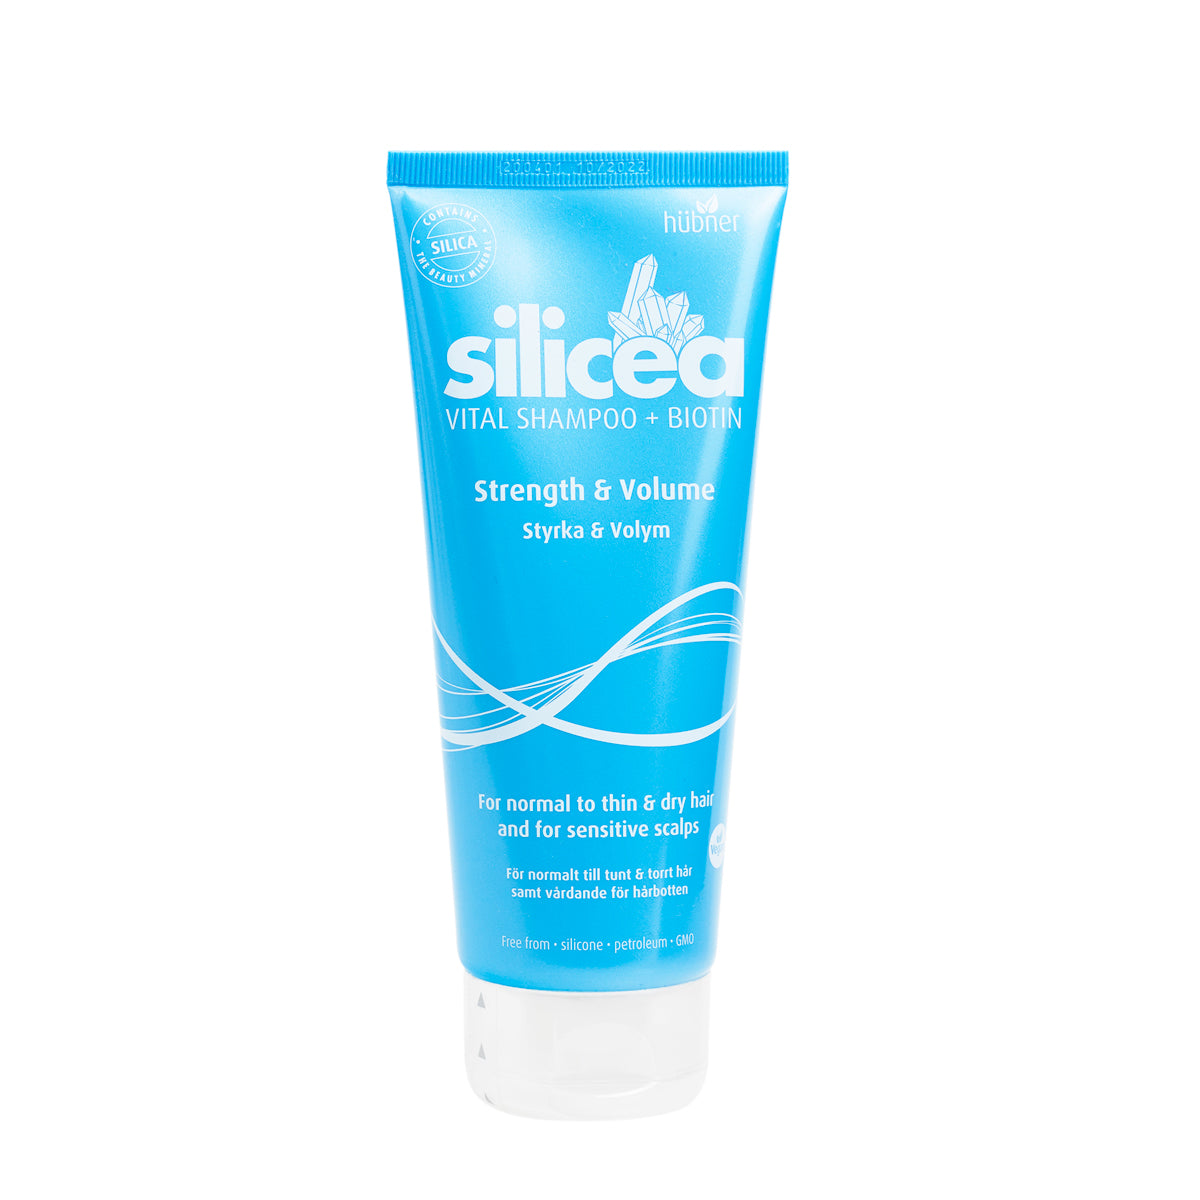 Primary image of Silica Shampoo